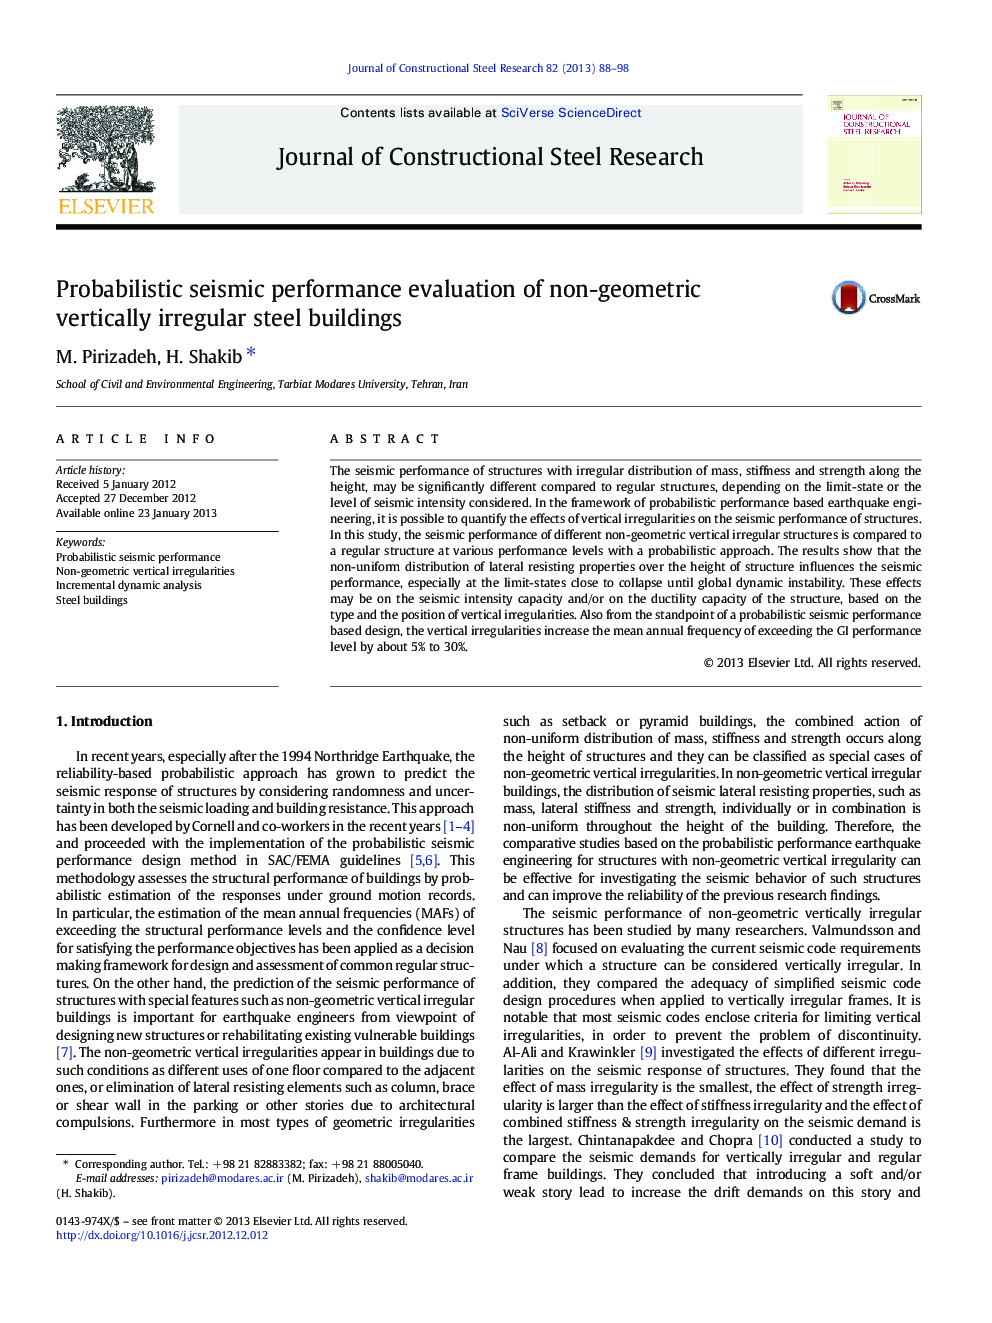 Probabilistic seismic performance evaluation of non-geometric vertically irregular steel buildings